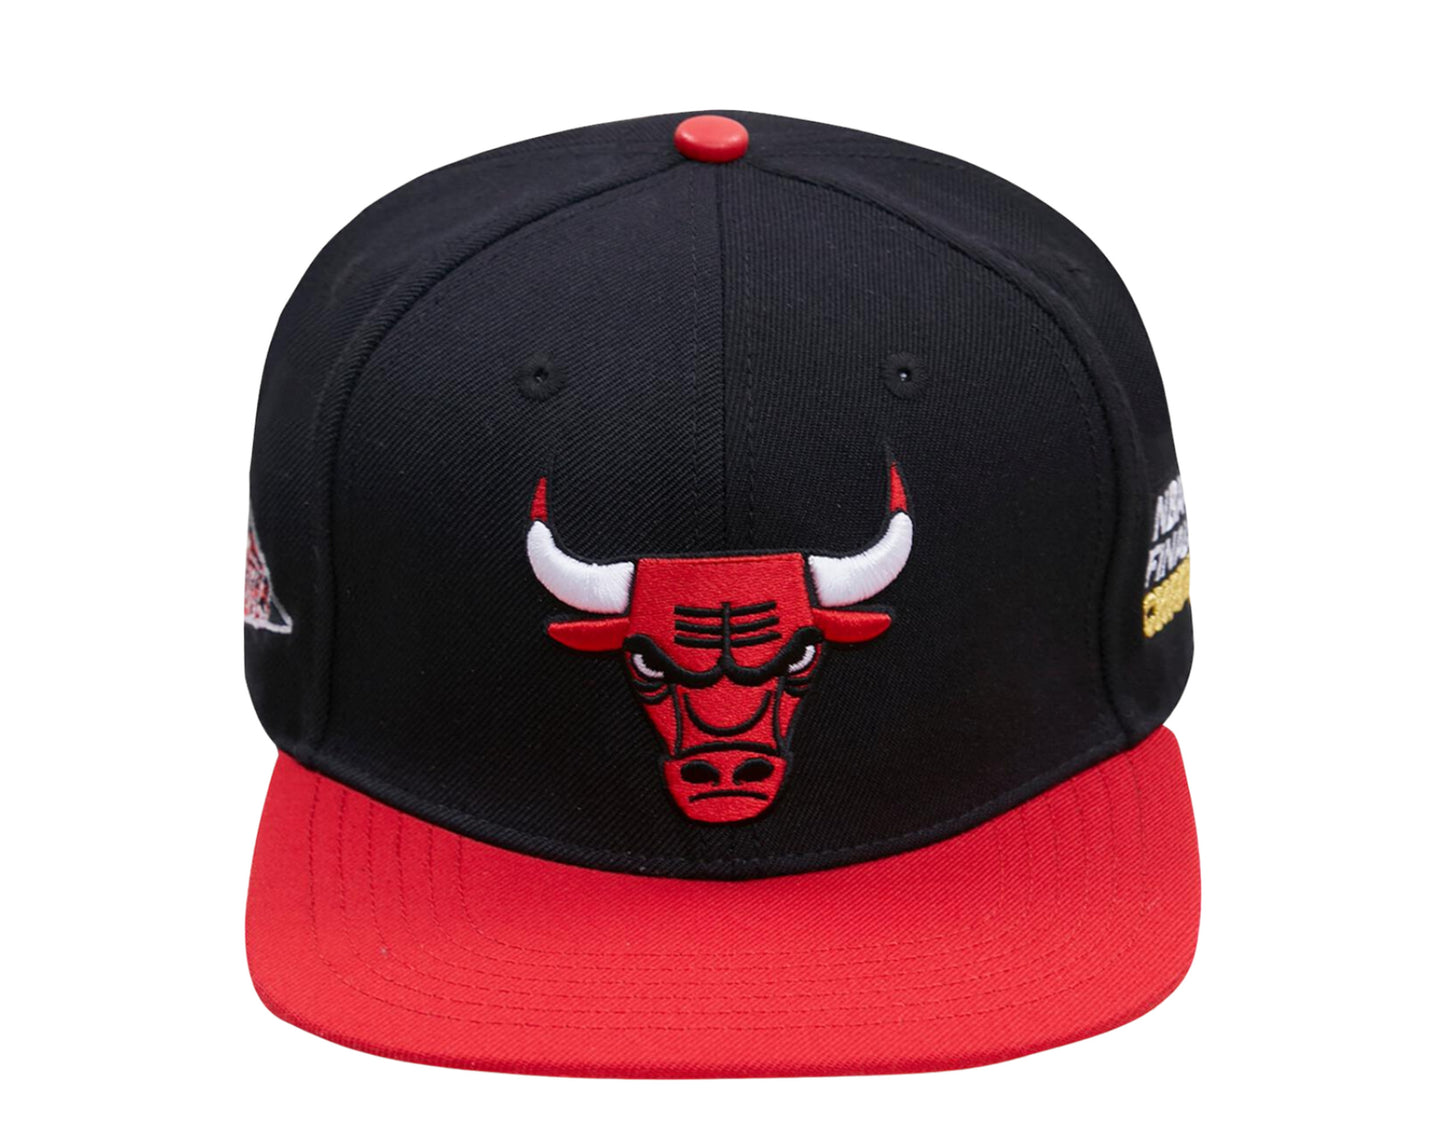 Pro Standard NBA Chicago Bulls Retro Classic Logo Snapback Hat